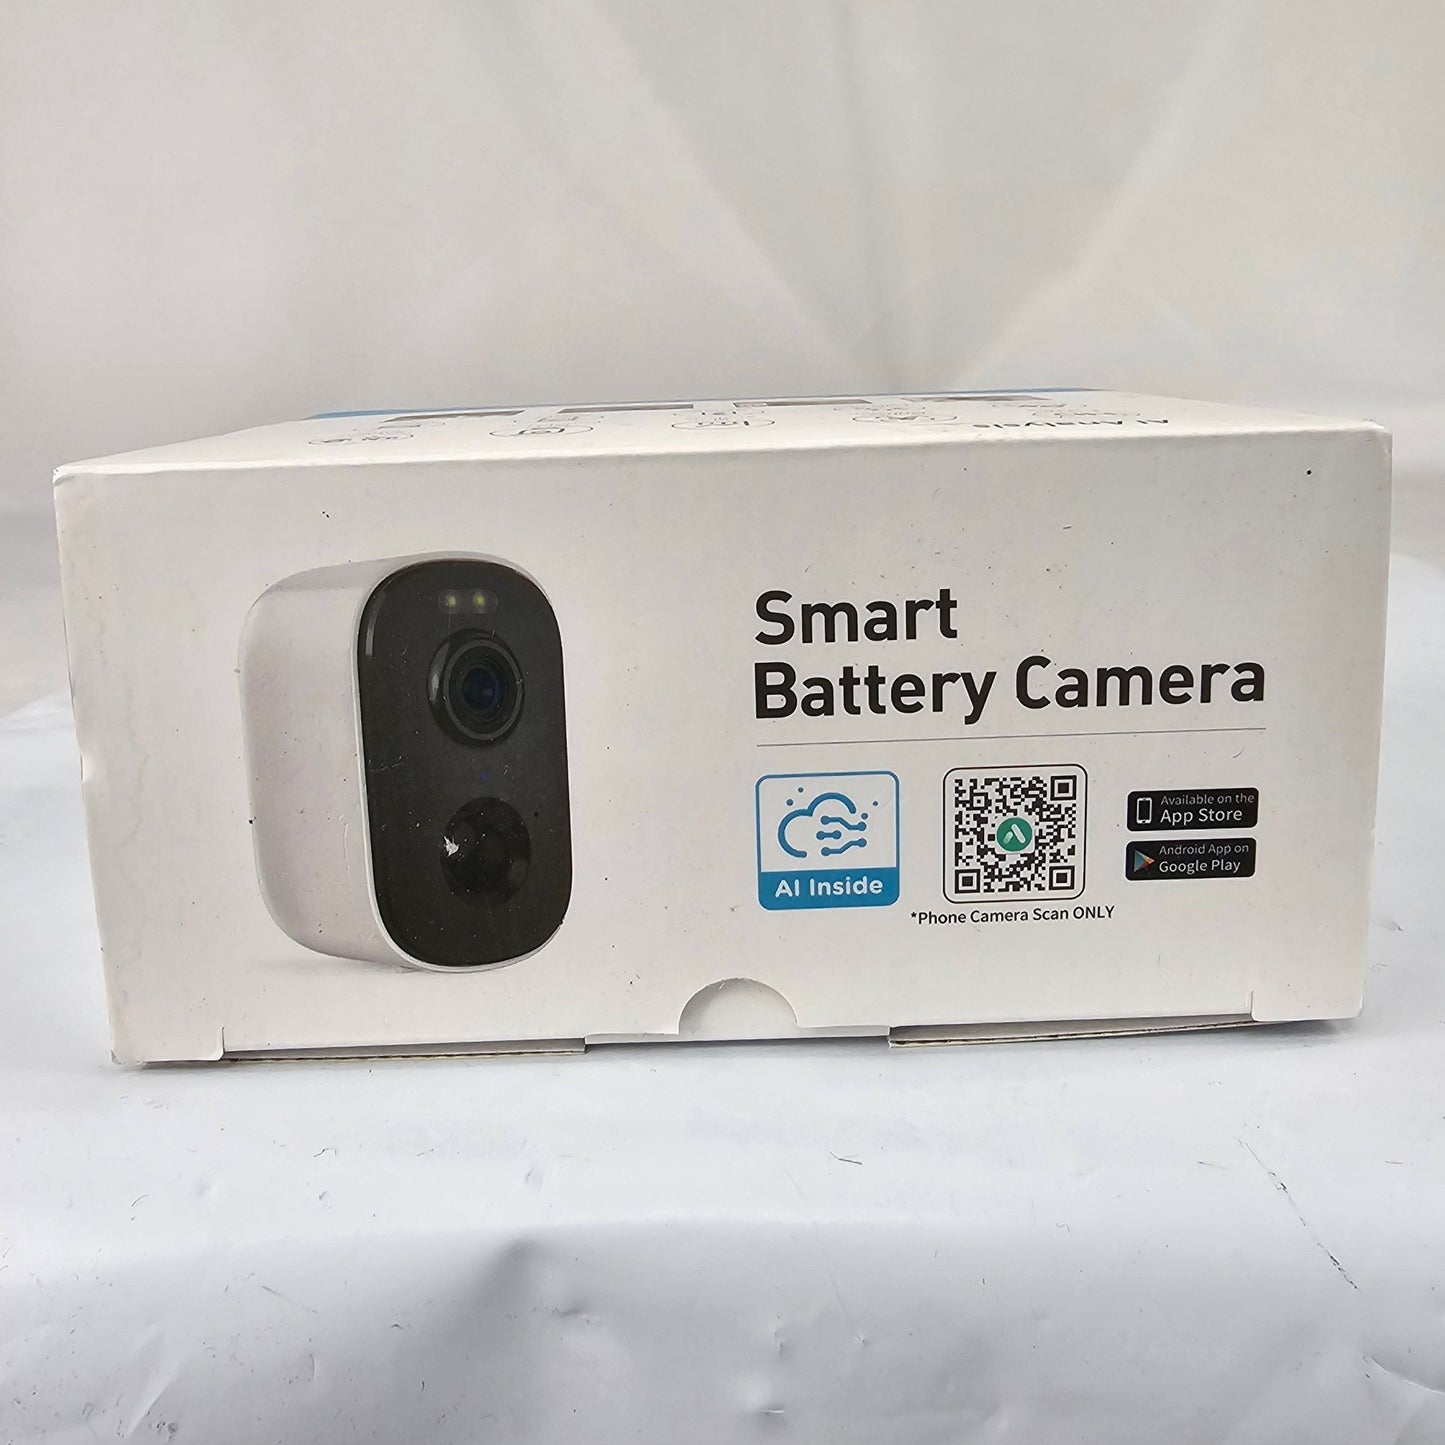 Smart Battery Camera Geekee CG6F-20 - DQ Distribution